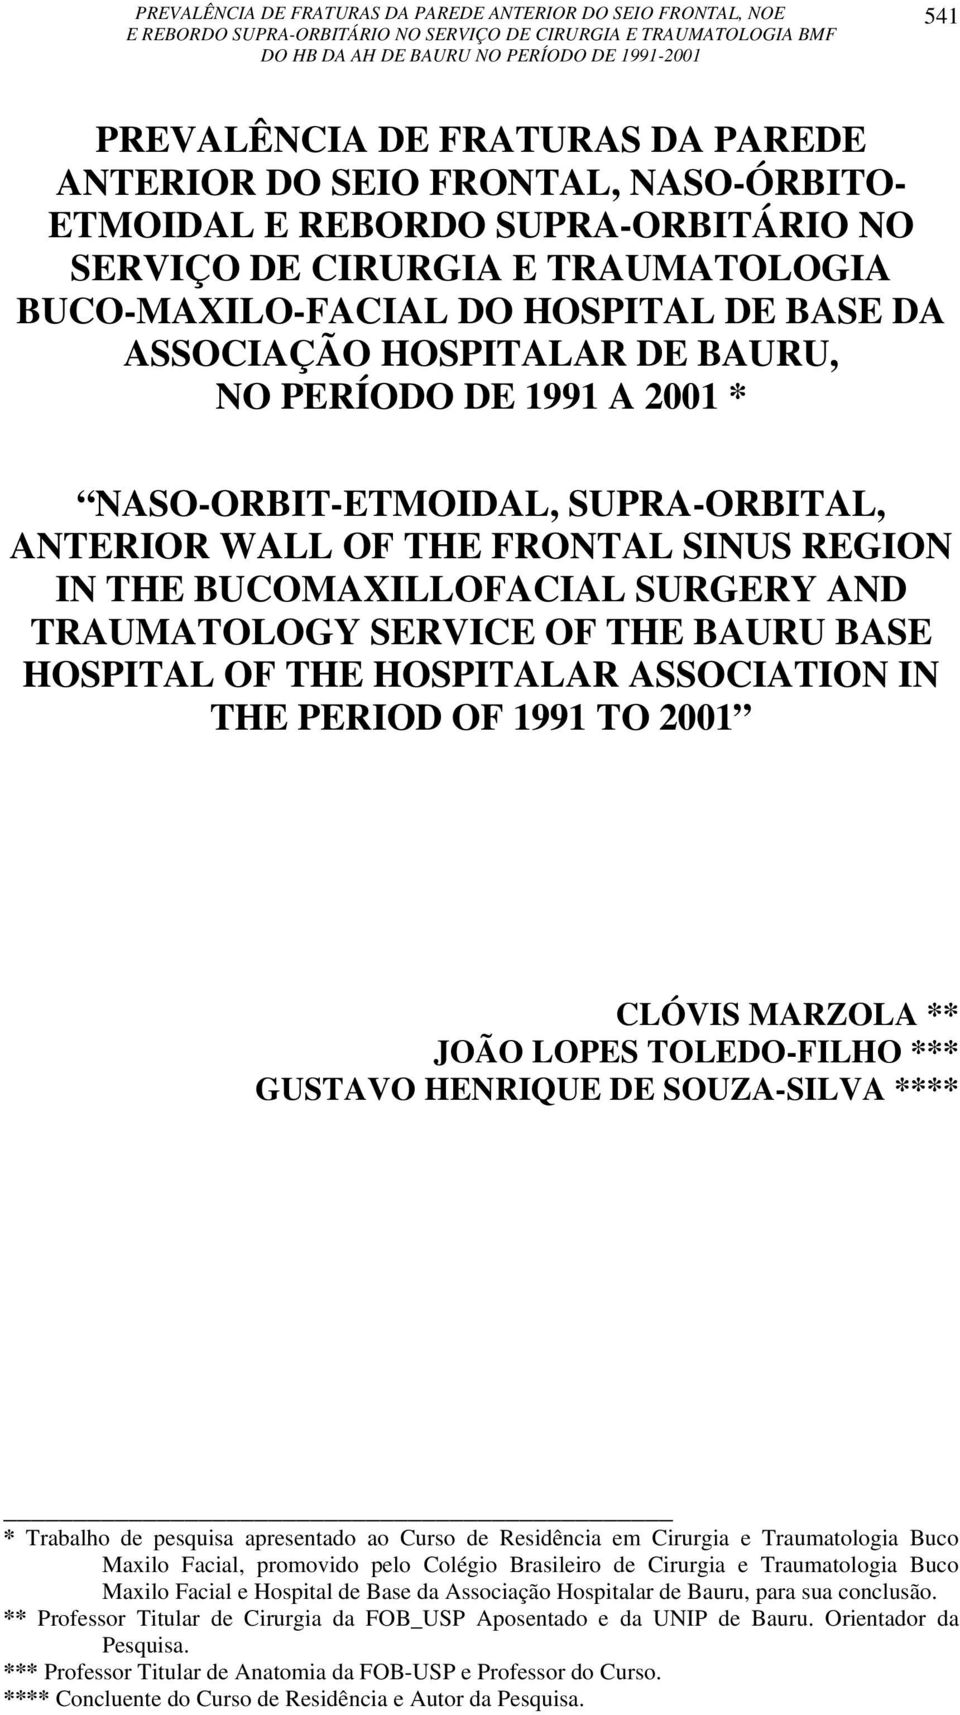 THE BAURU BASE HOSPITAL OF THE HOSPITALAR ASSOCIATION IN THE PERIOD OF 1991 TO 2001 CLÓVIS MARZOLA ** JOÃO LOPES TOLEDO-FILHO *** GUSTAVO HENRIQUE DE SOUZA-SILVA **** * Trabalho de pesquisa